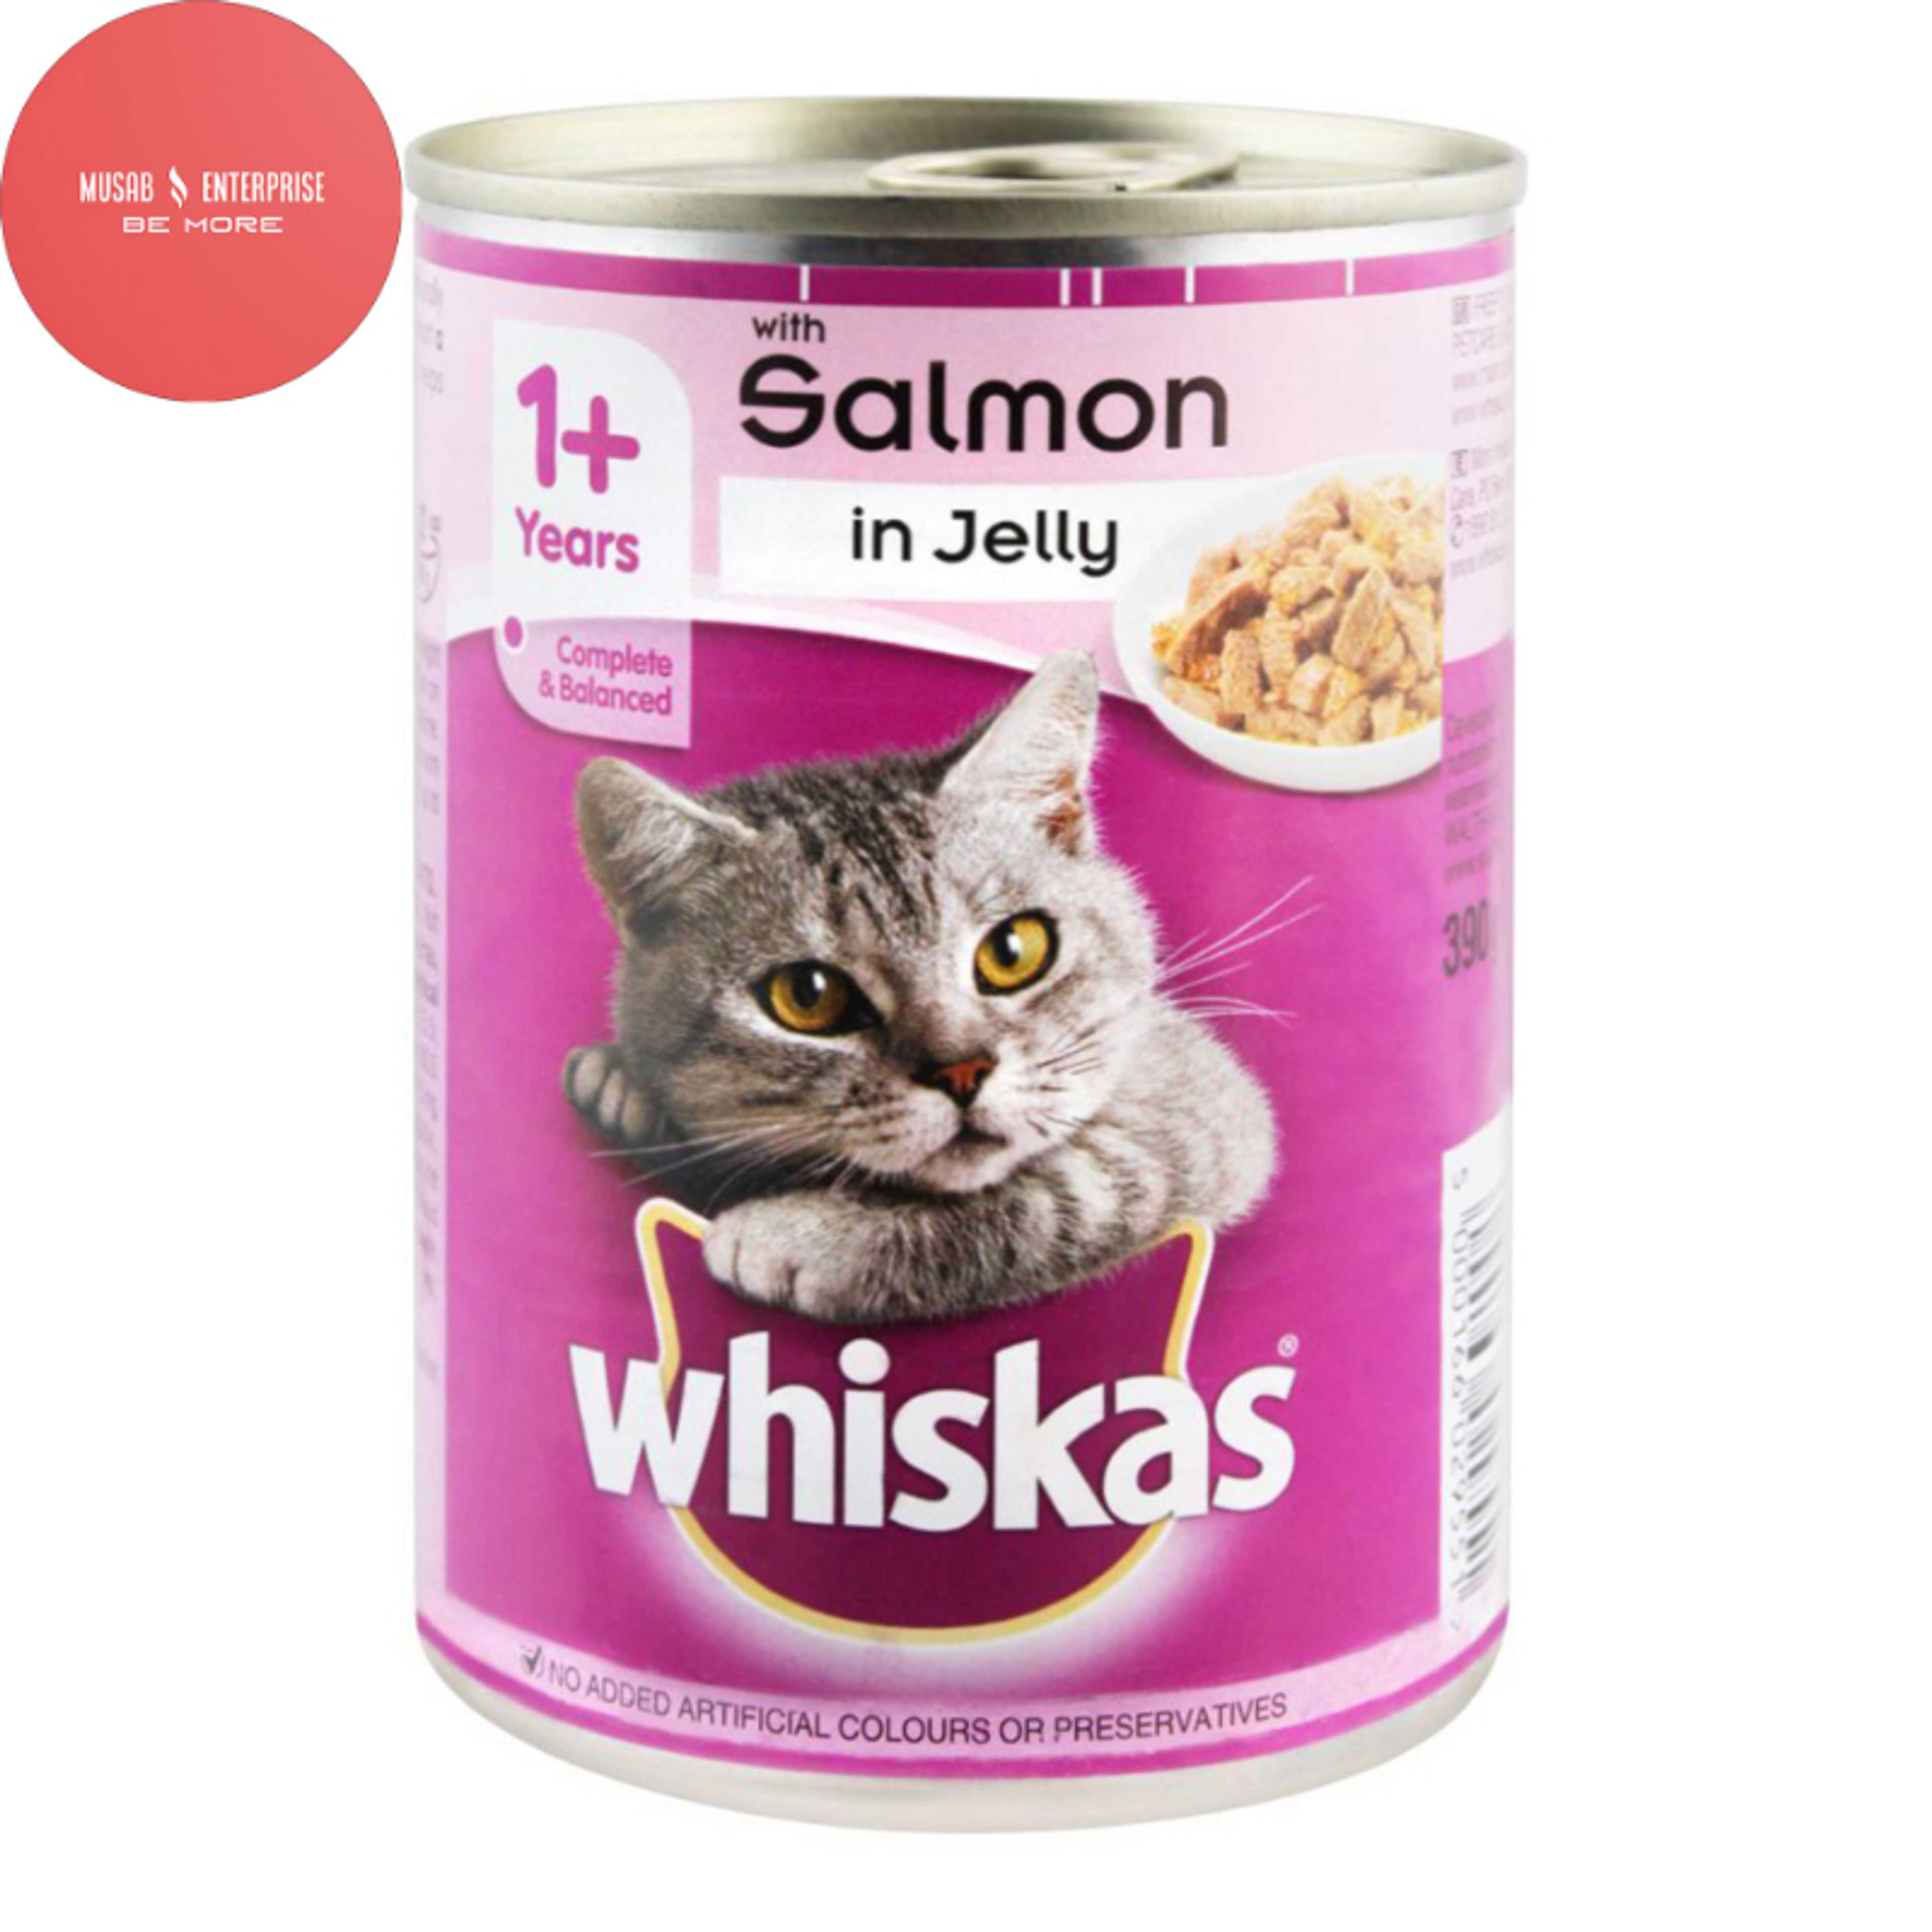 Whiskas Cat Food Jelly Tin, Salmon Flavor, Adult Cat, 390gm